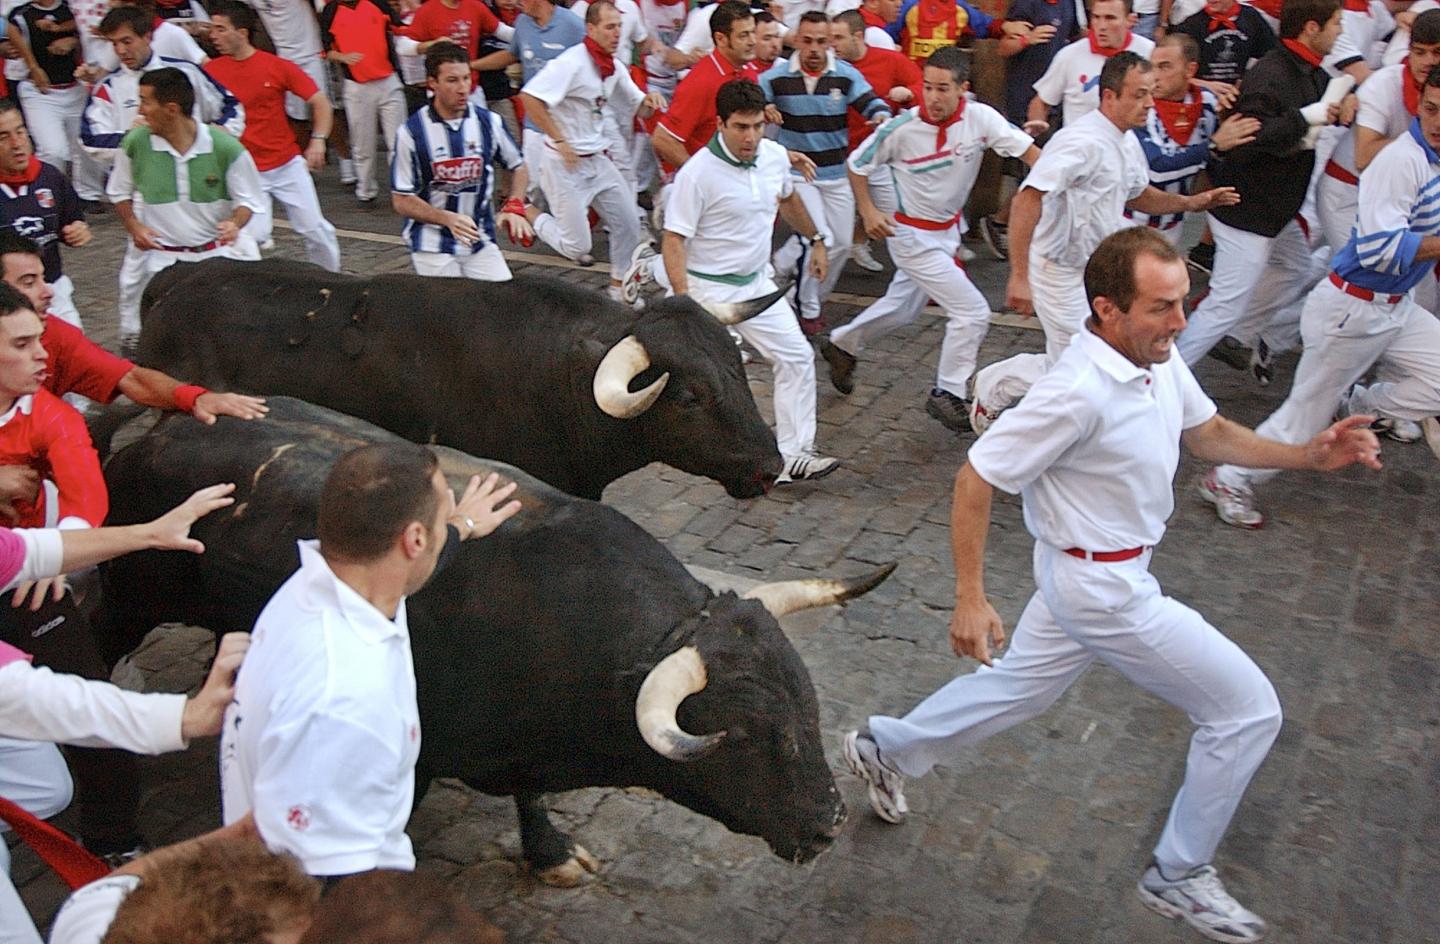 Bull Running